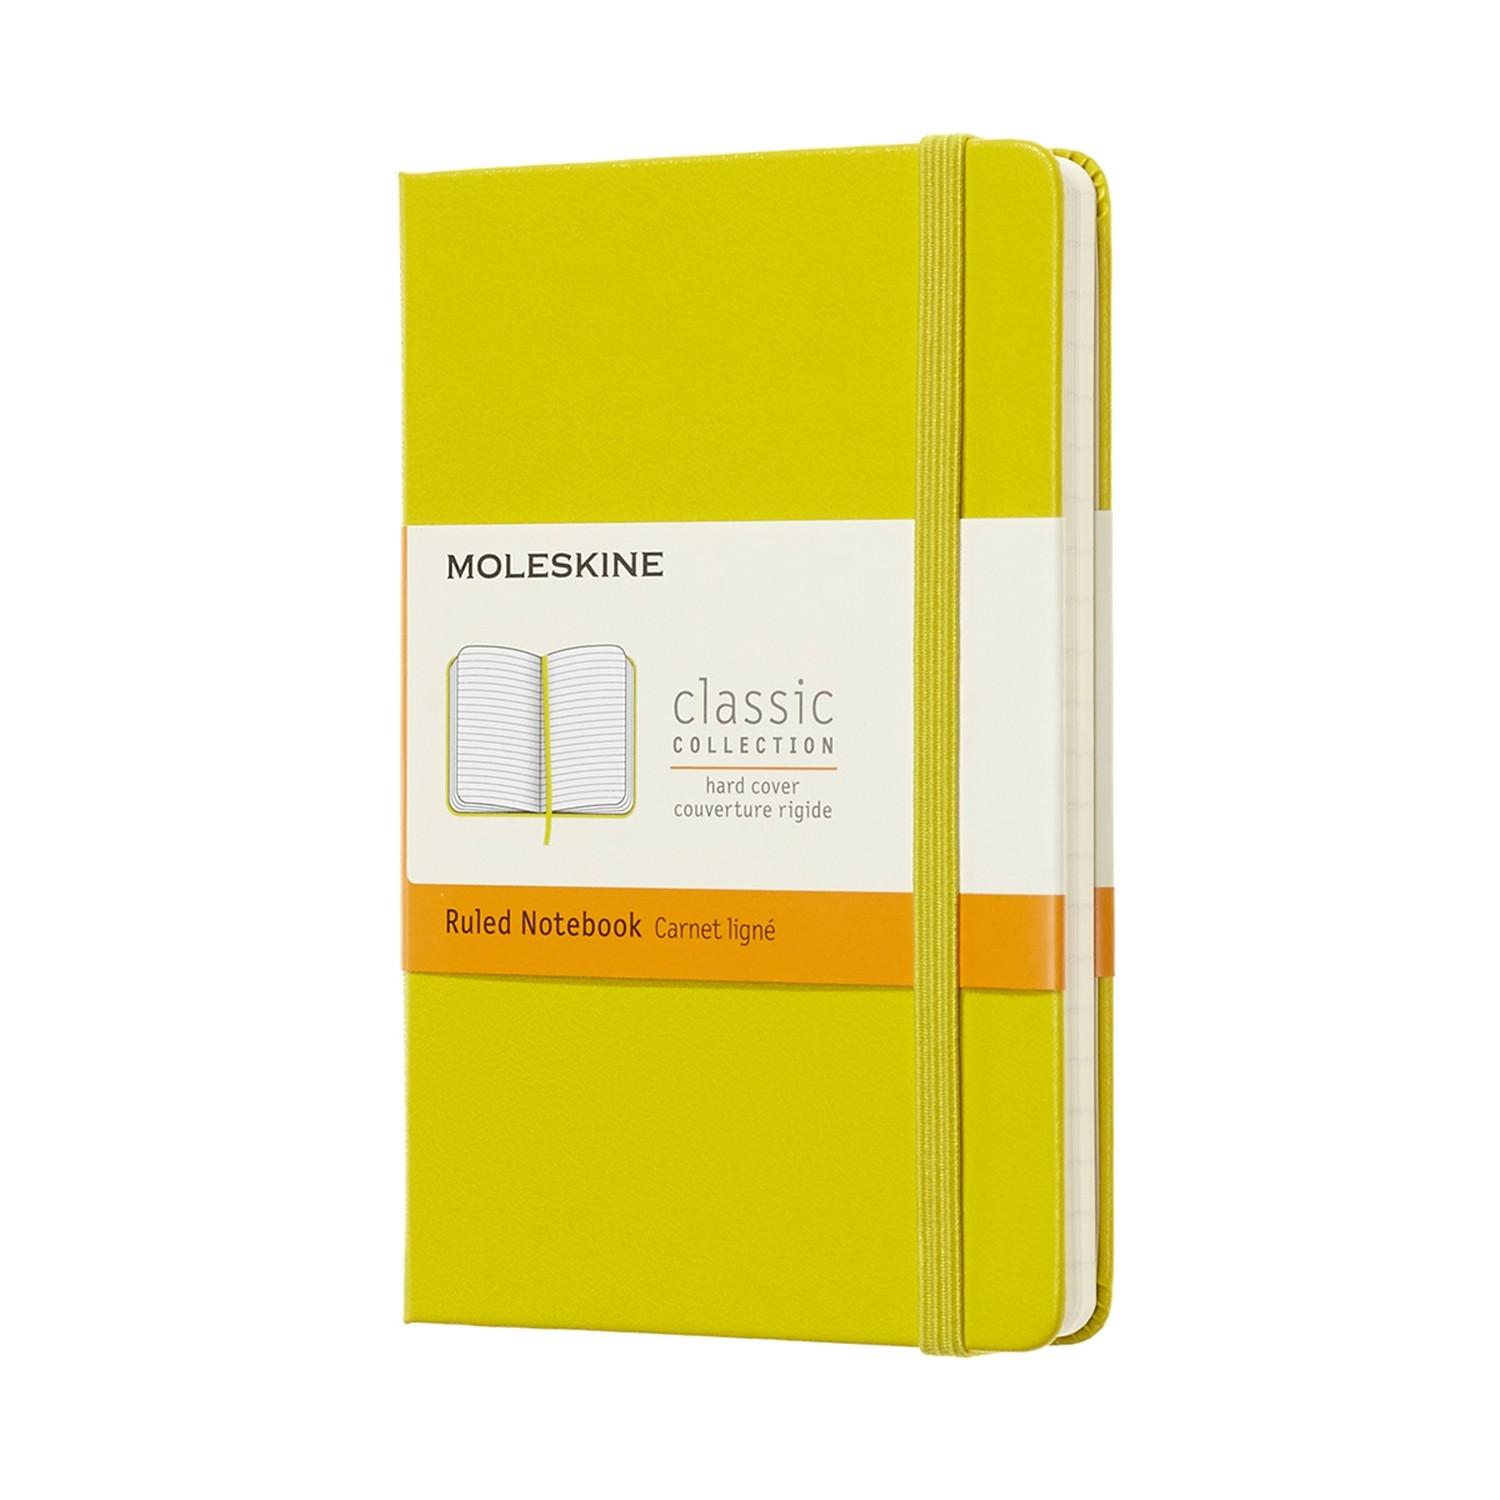 Moleskine Notebook Pocket Ruled Dandelion Yellow HARD COVER